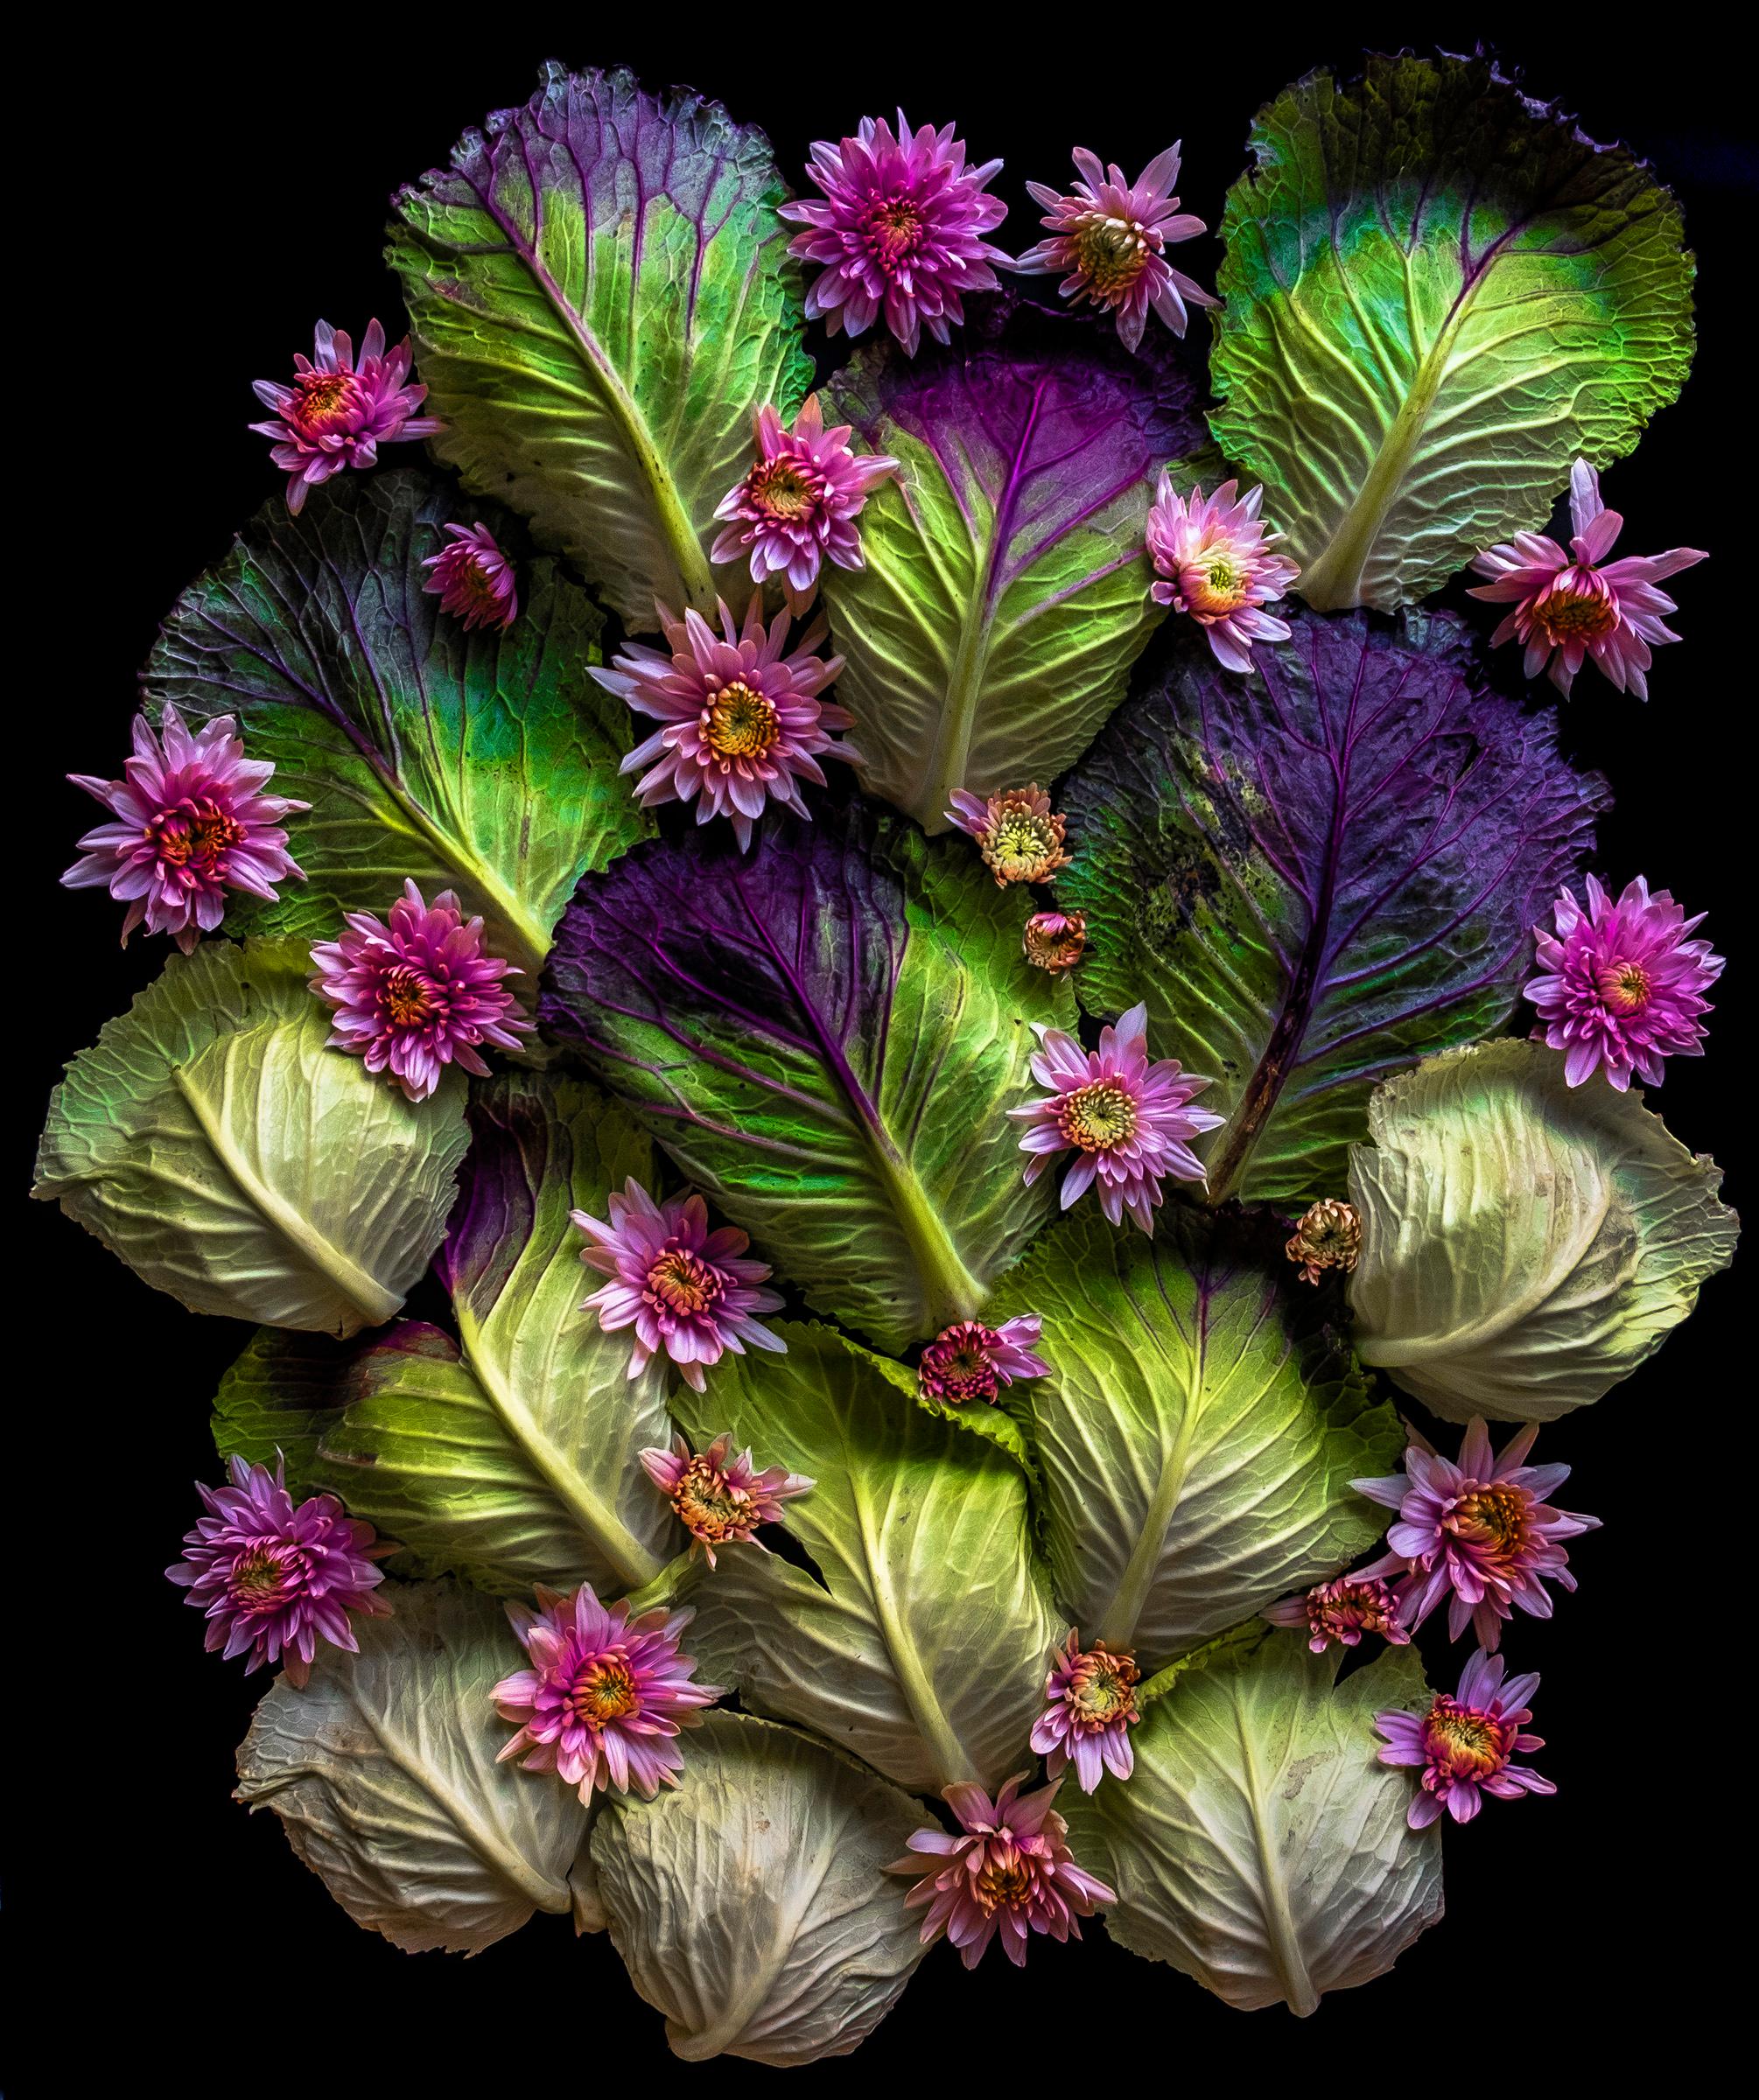 Sarah Phillips Color Photograph - Purple Savoy Cabbage Leaves, absurdist still life food photograph, 2020